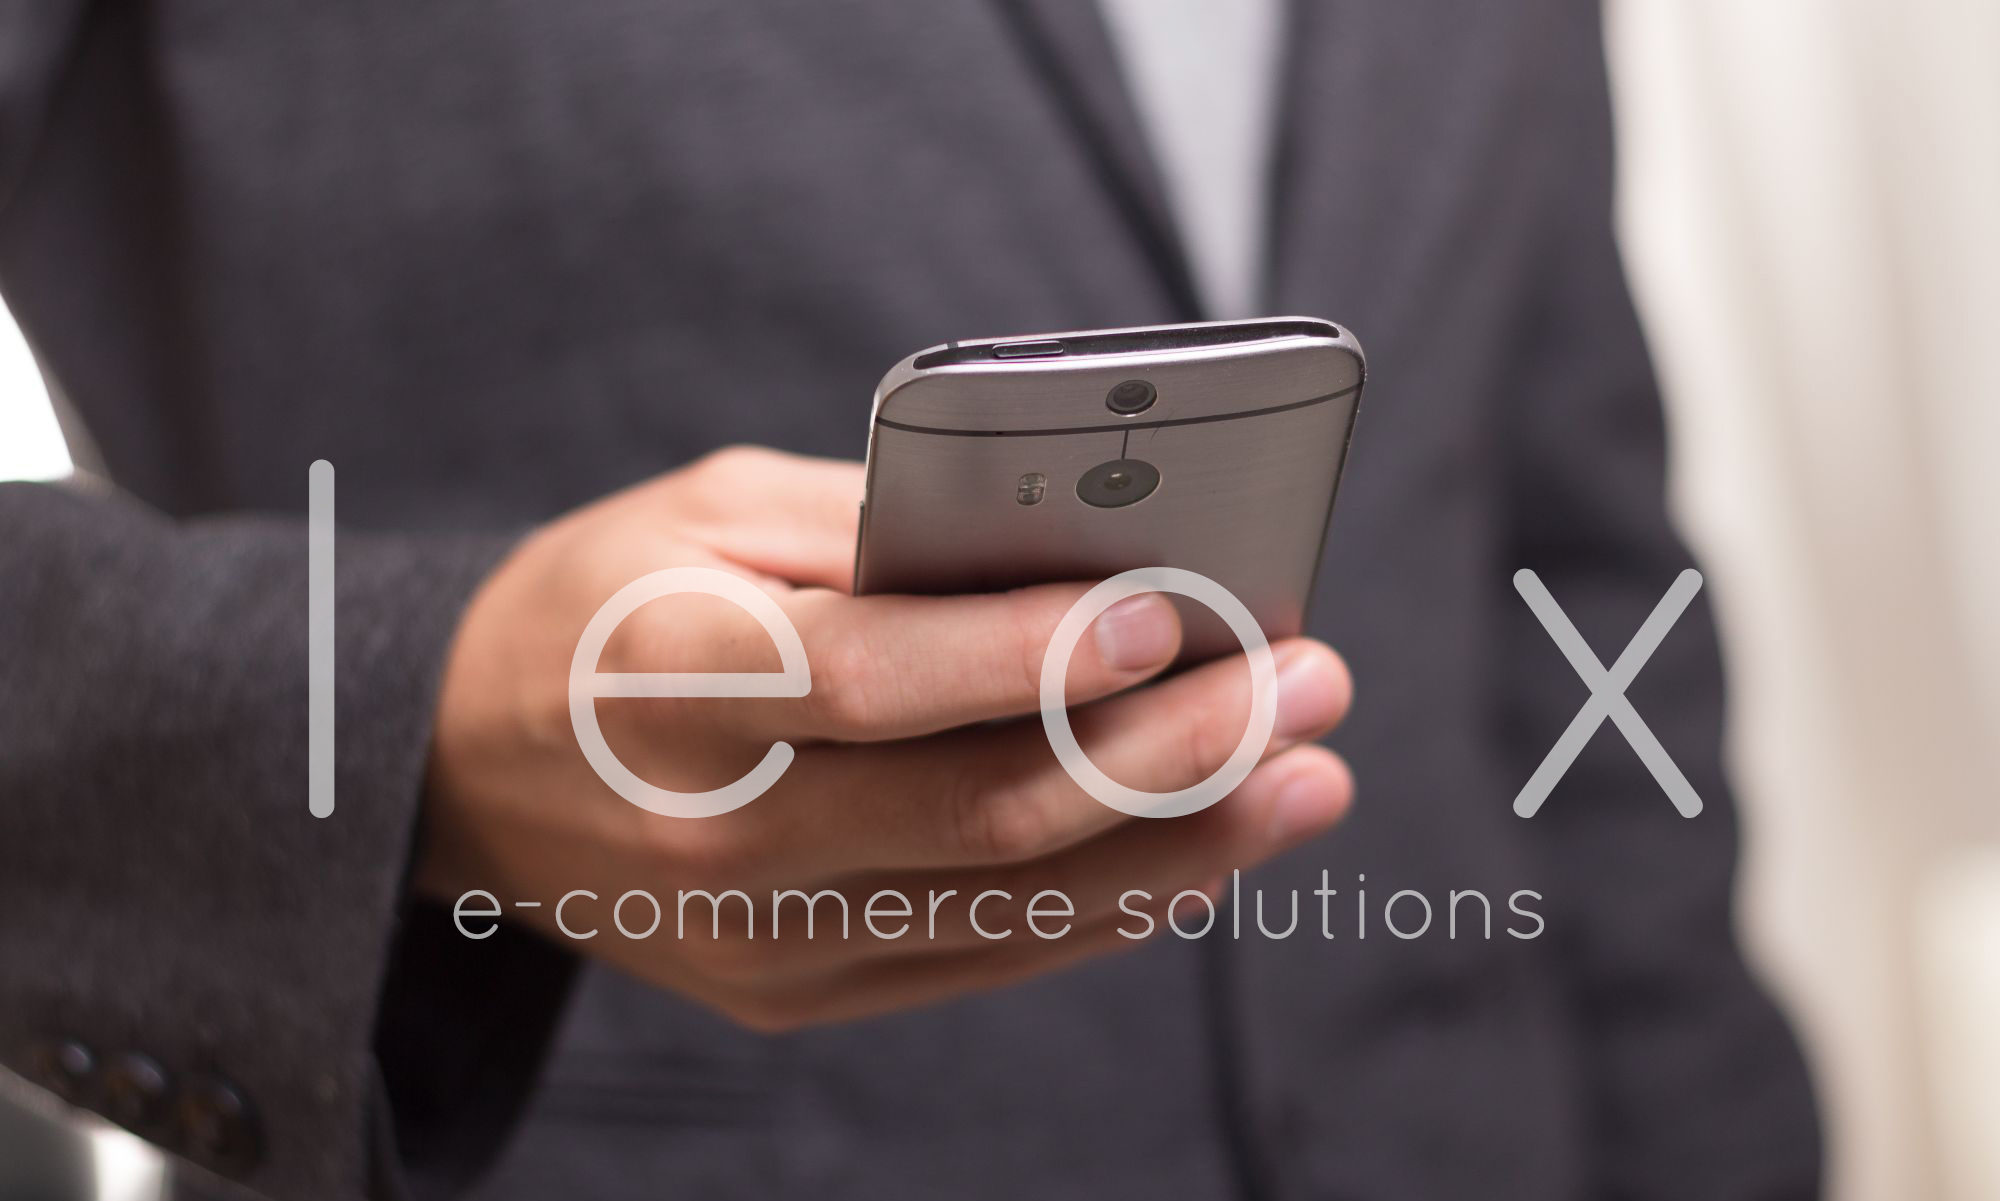 leox e-commerce solutions